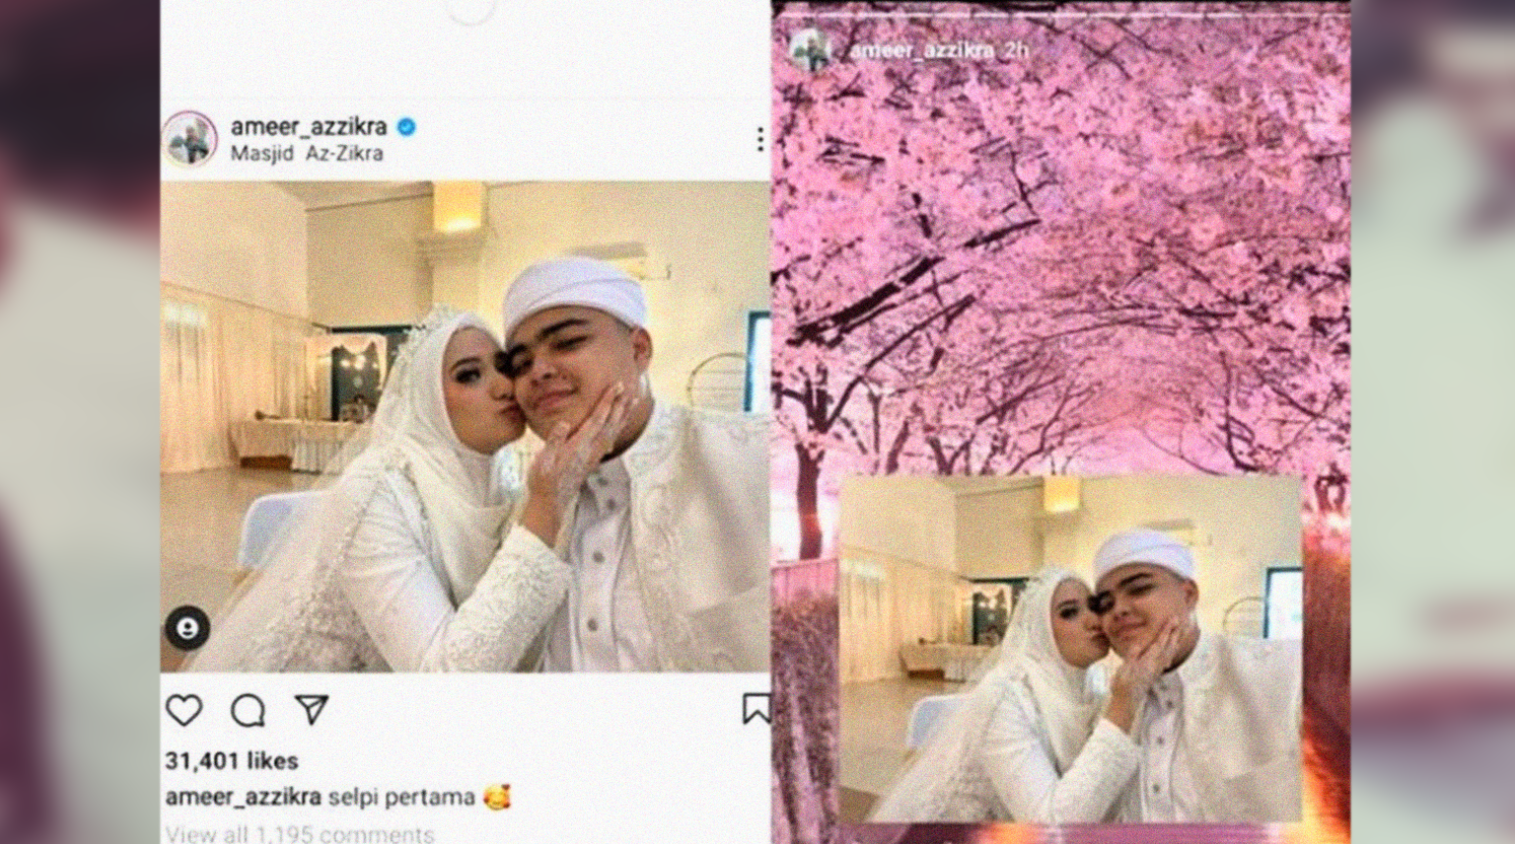 Ameer Azzikra, adik Alvin Faiz, telah resmi menikah dengan Nadzira Shafa di Pondok Pesantren Azzikra, Sentul, Bogor, pada Kamis 10 Juni 2021 sekitar pukul 06.00 WIB. (Foto: Instagram)